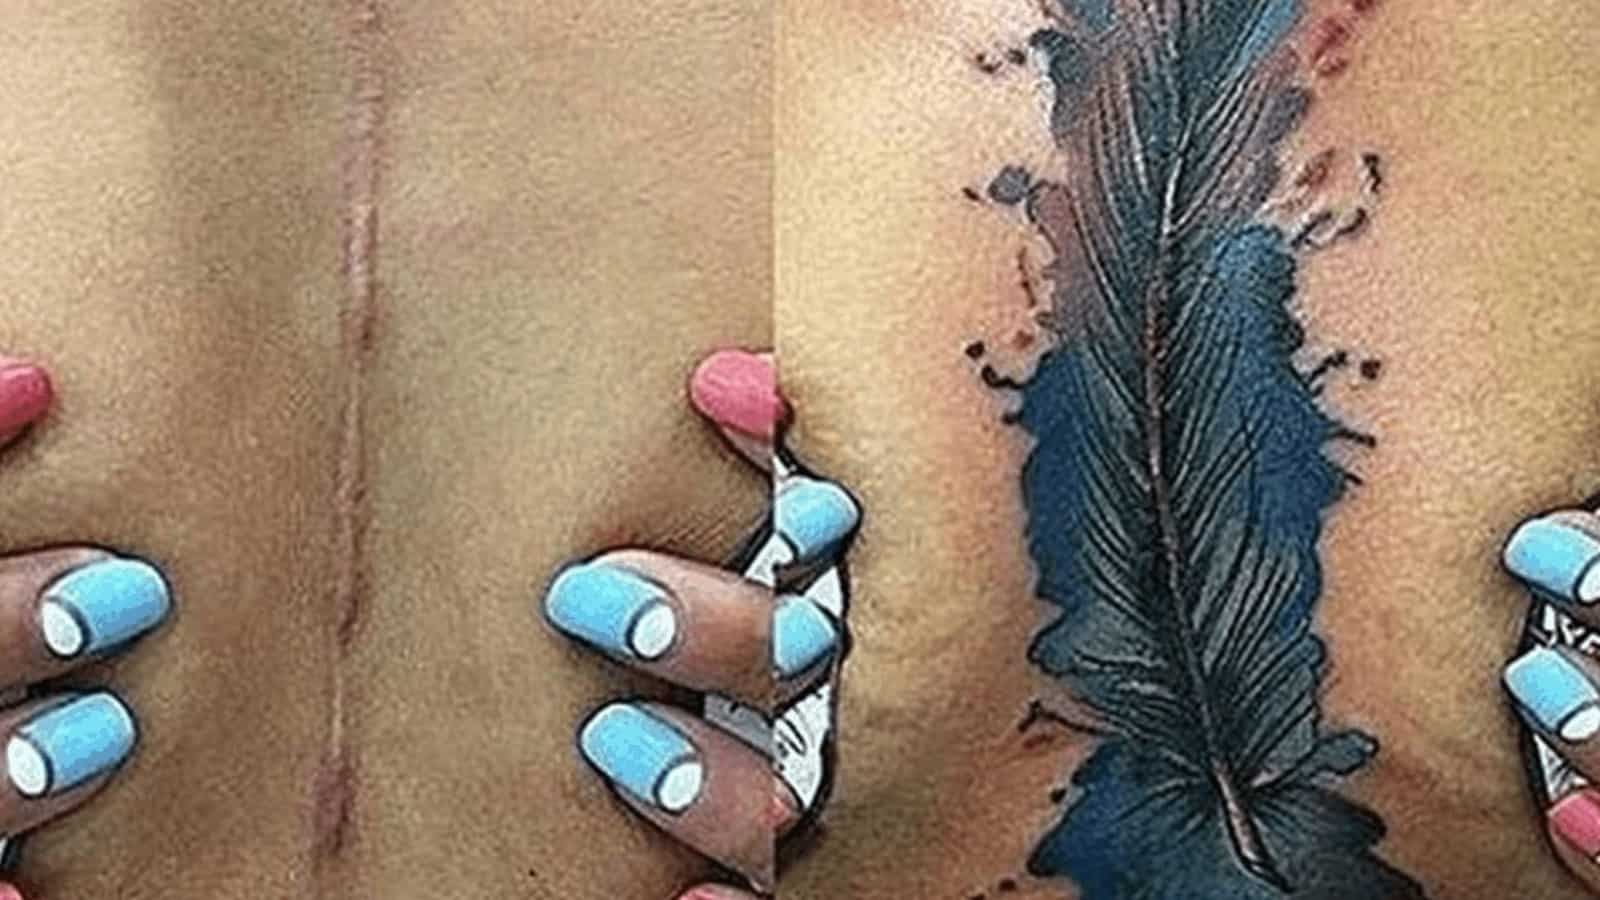 JO BLOGS My clients story Morags scar coverup tattoo  UN1TY Tattoo  Studio  Shrewsbury